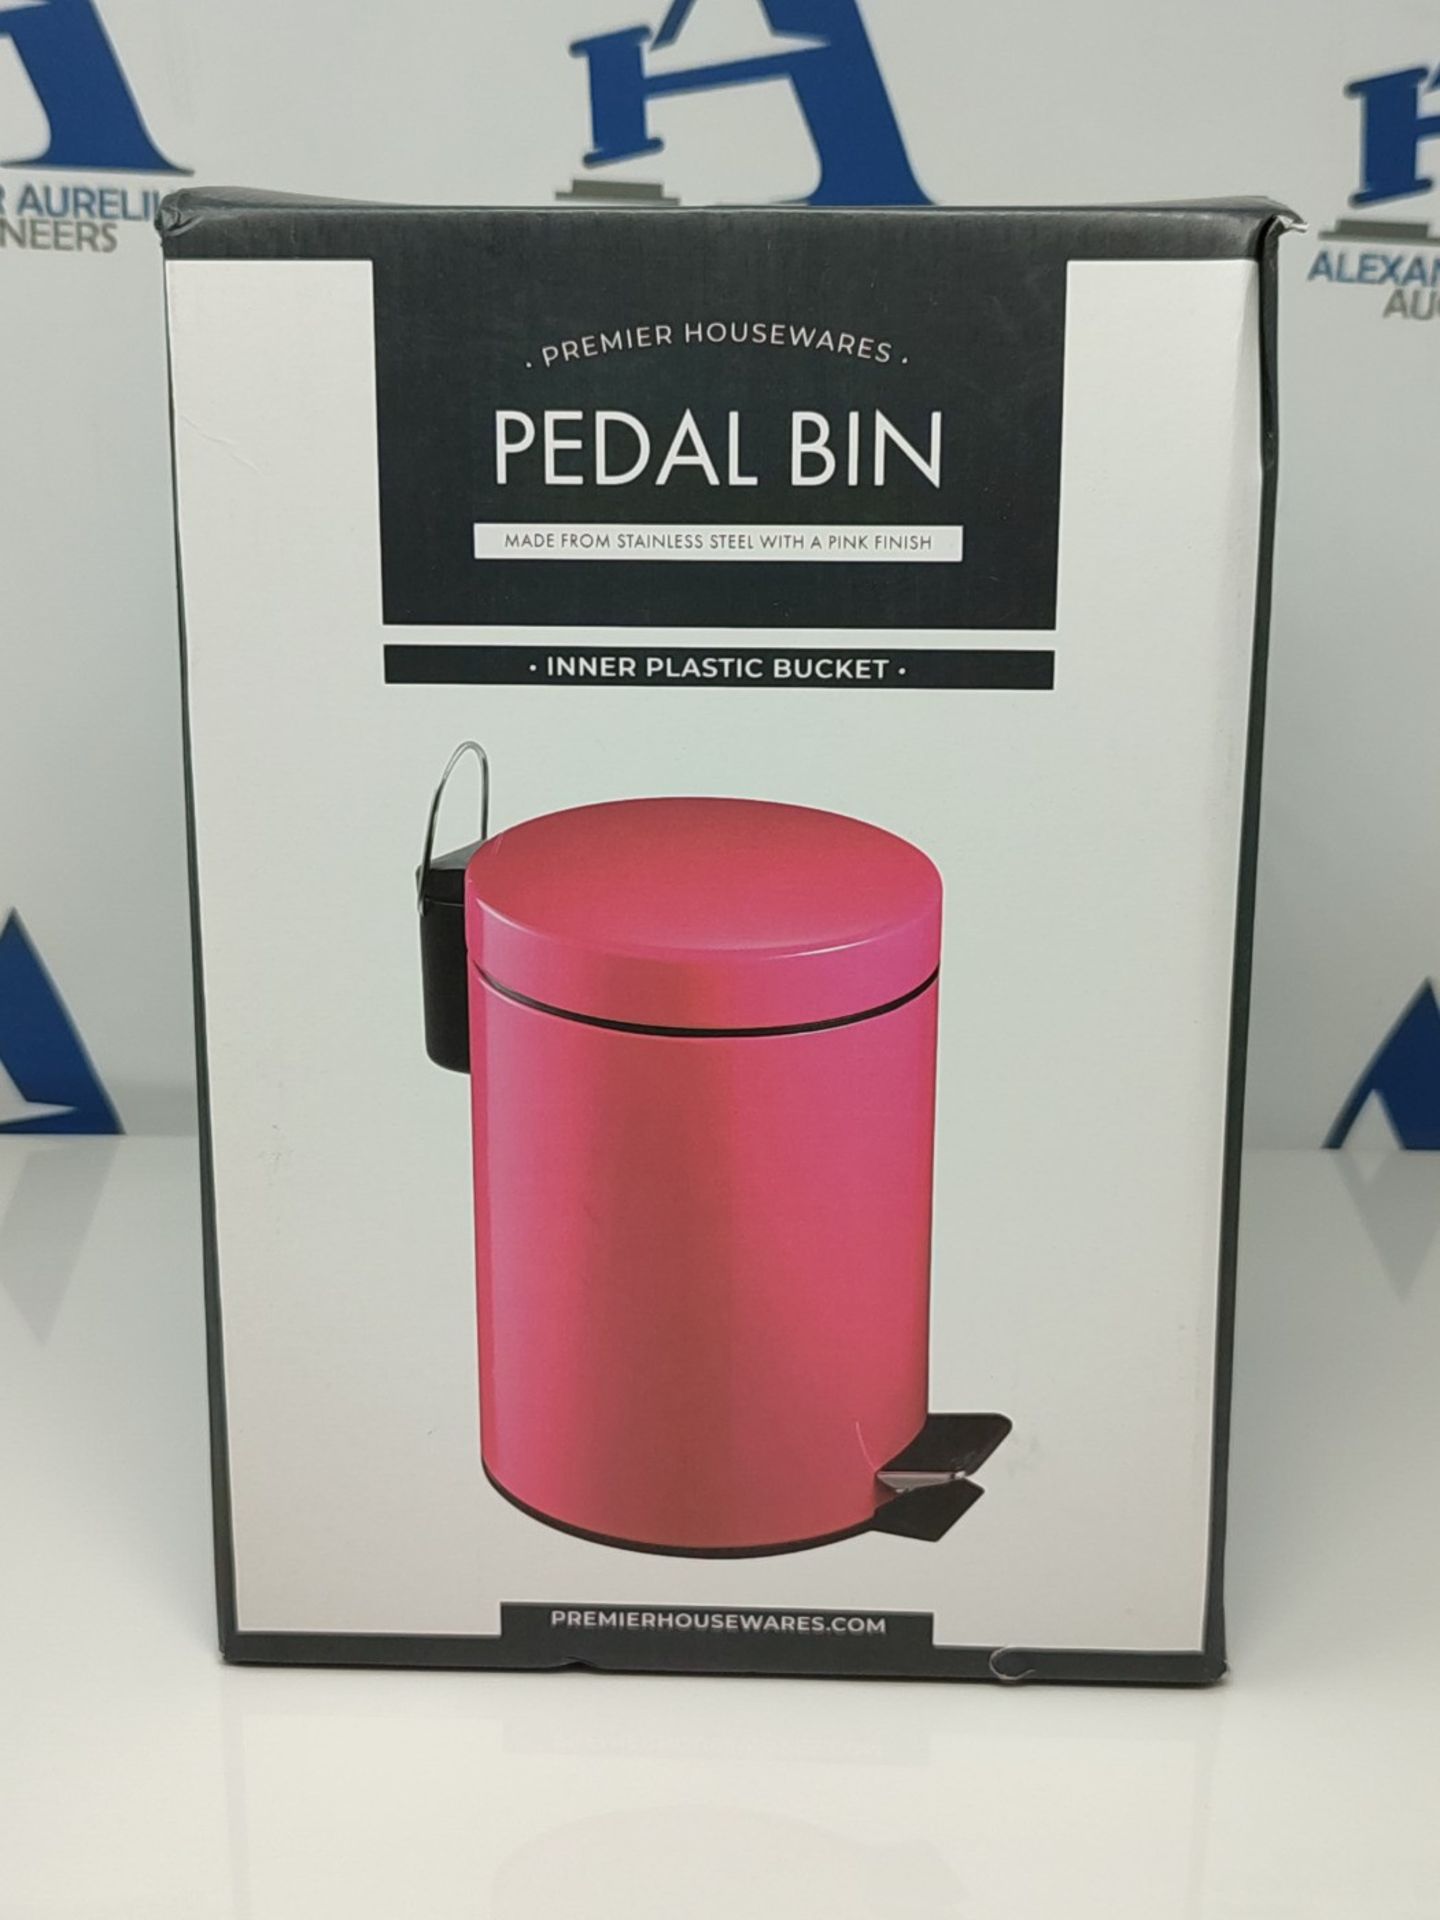 Premier Housewares 506420 Pedal Bin Hot Pink Kitchen Bin Stainless Steel Bathroom Bin - Image 2 of 3